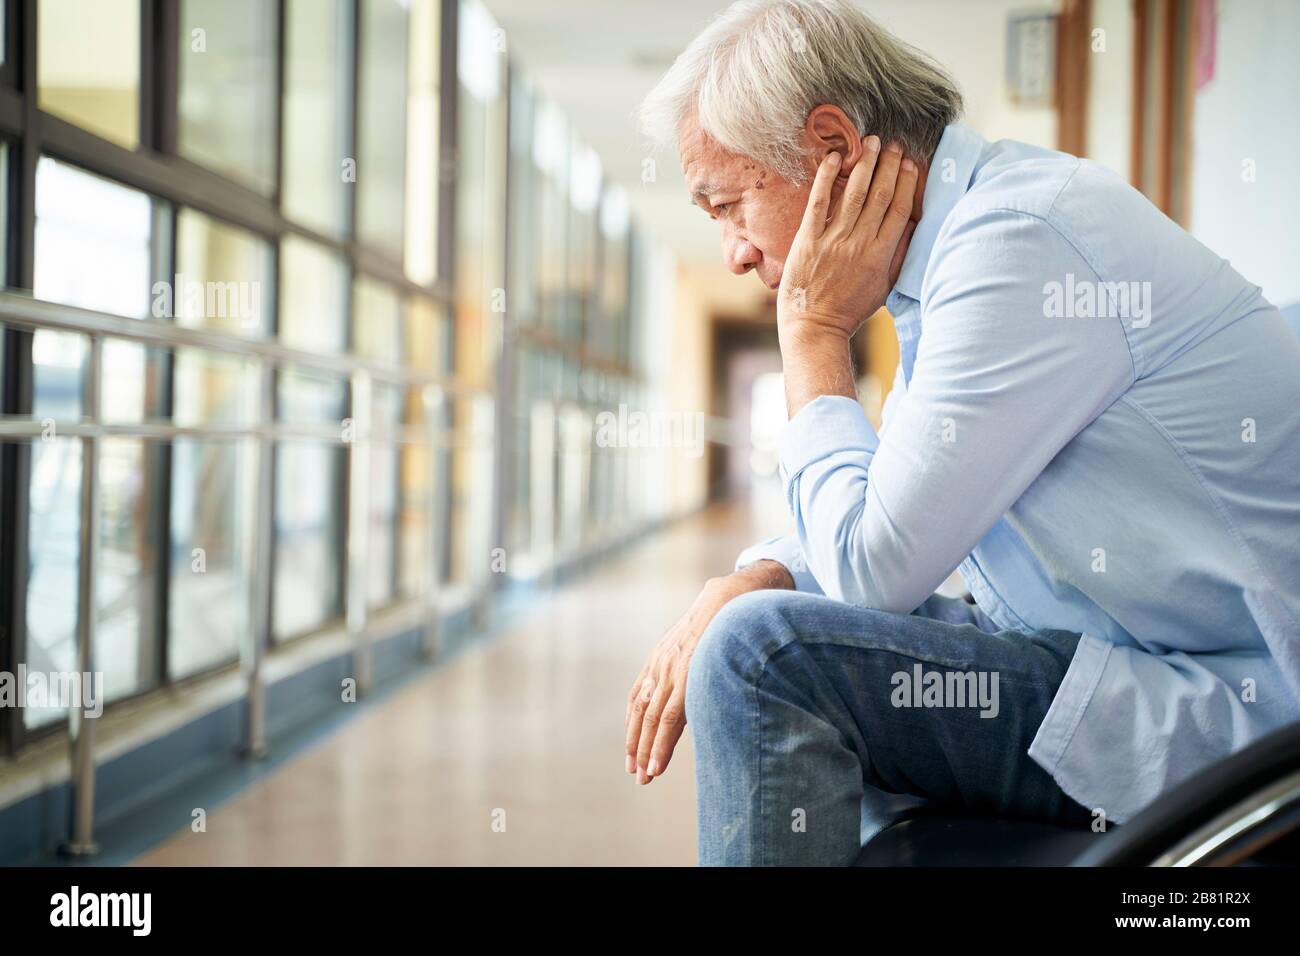 sad and devastated asian senior man sitting alone in empty hospital hallway, head in hand Stock Photo